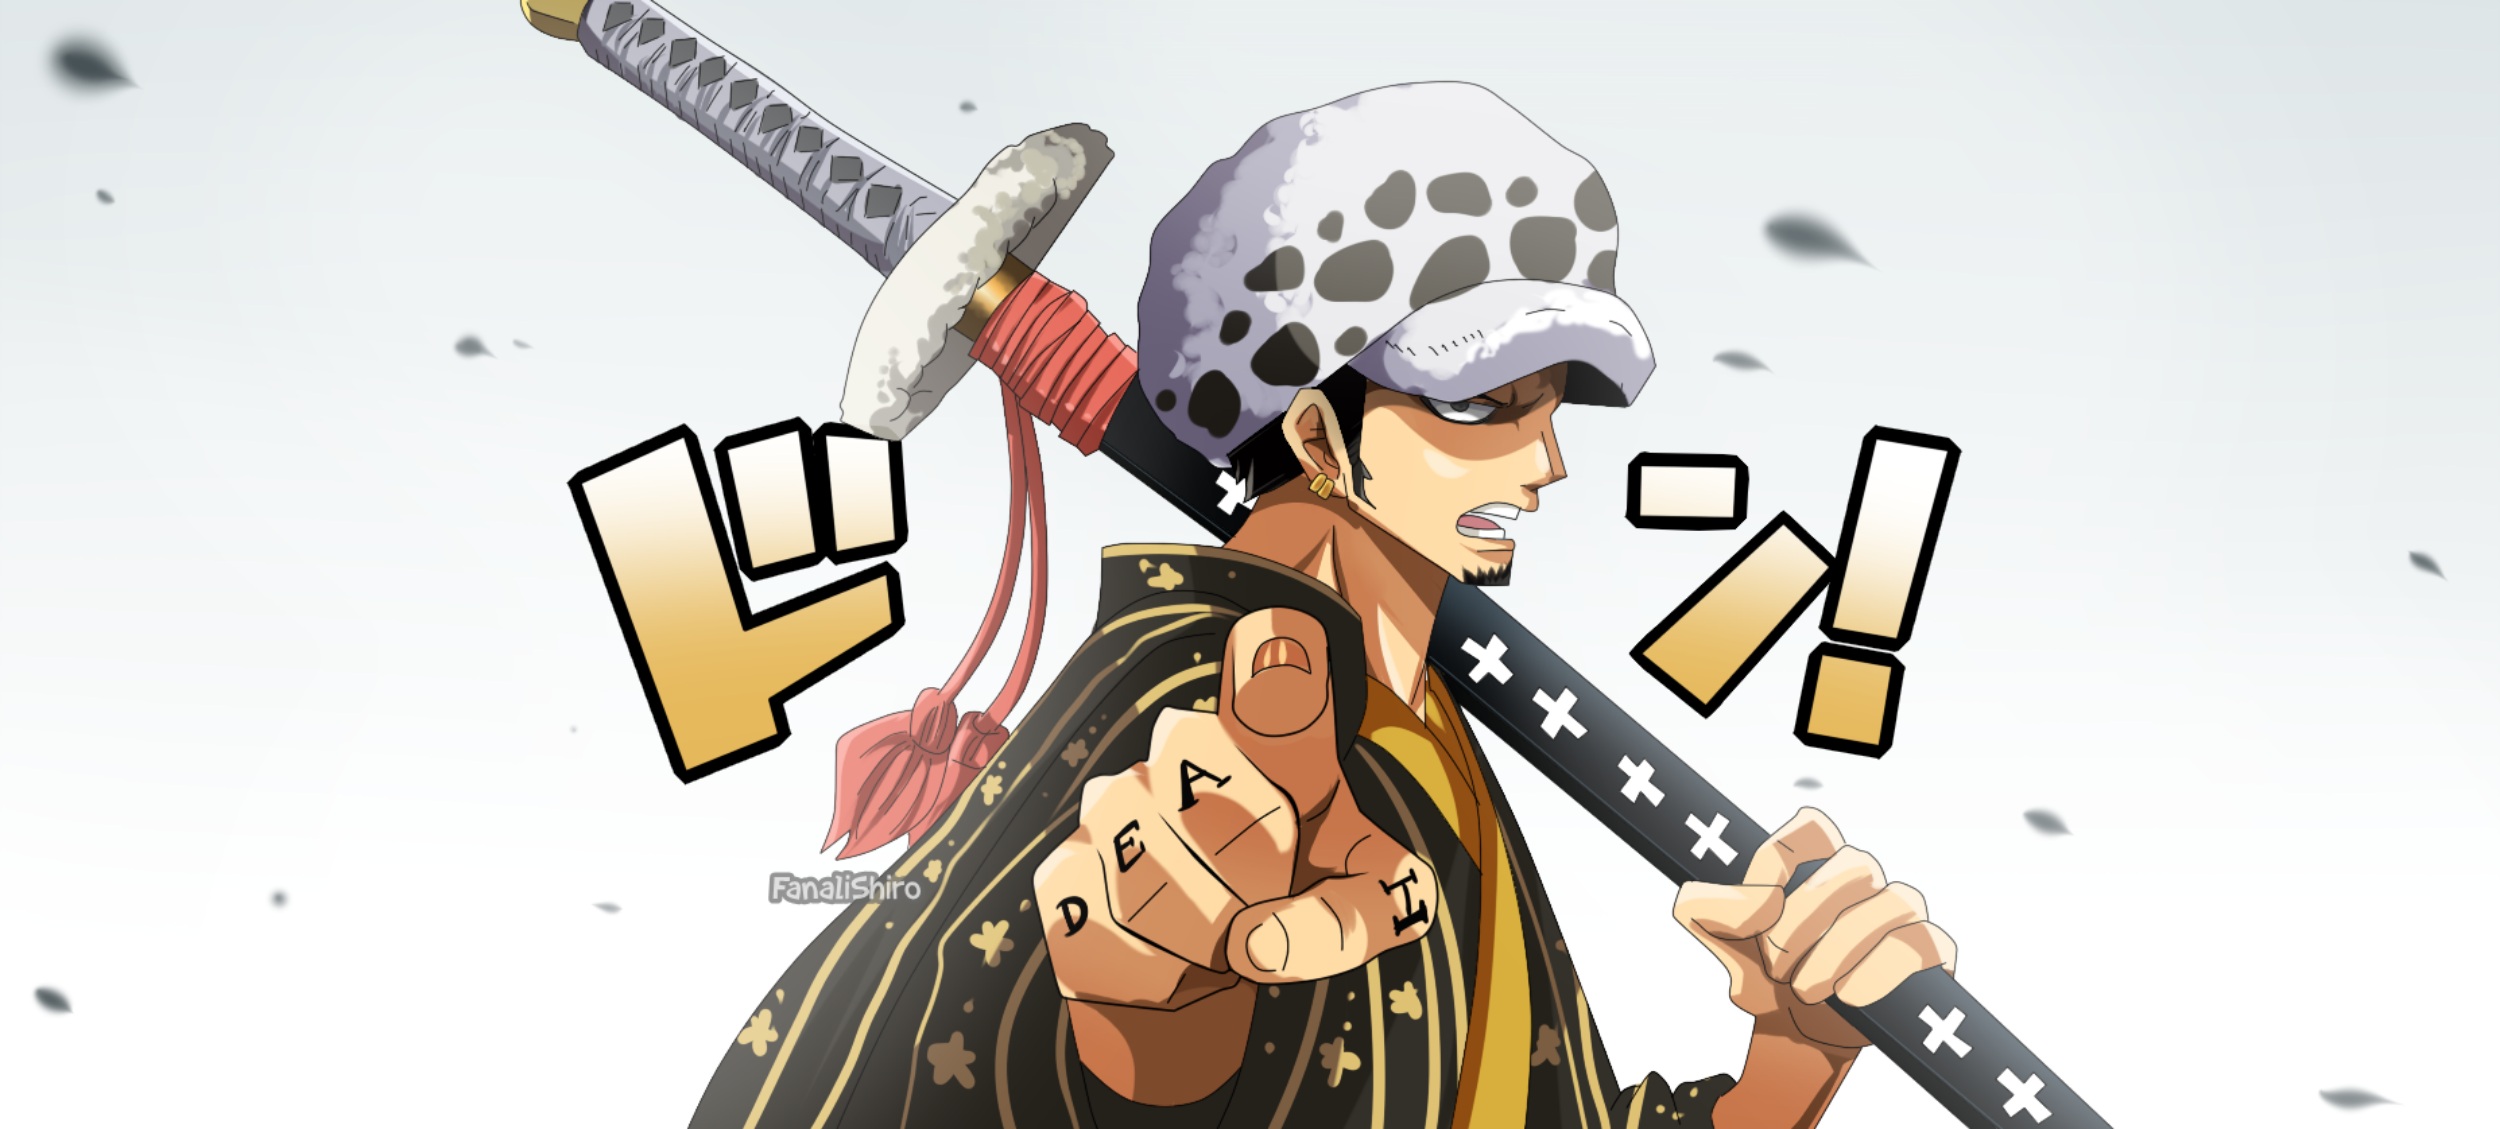 Anime One Piece Hd Wallpaper By Fanalishiro